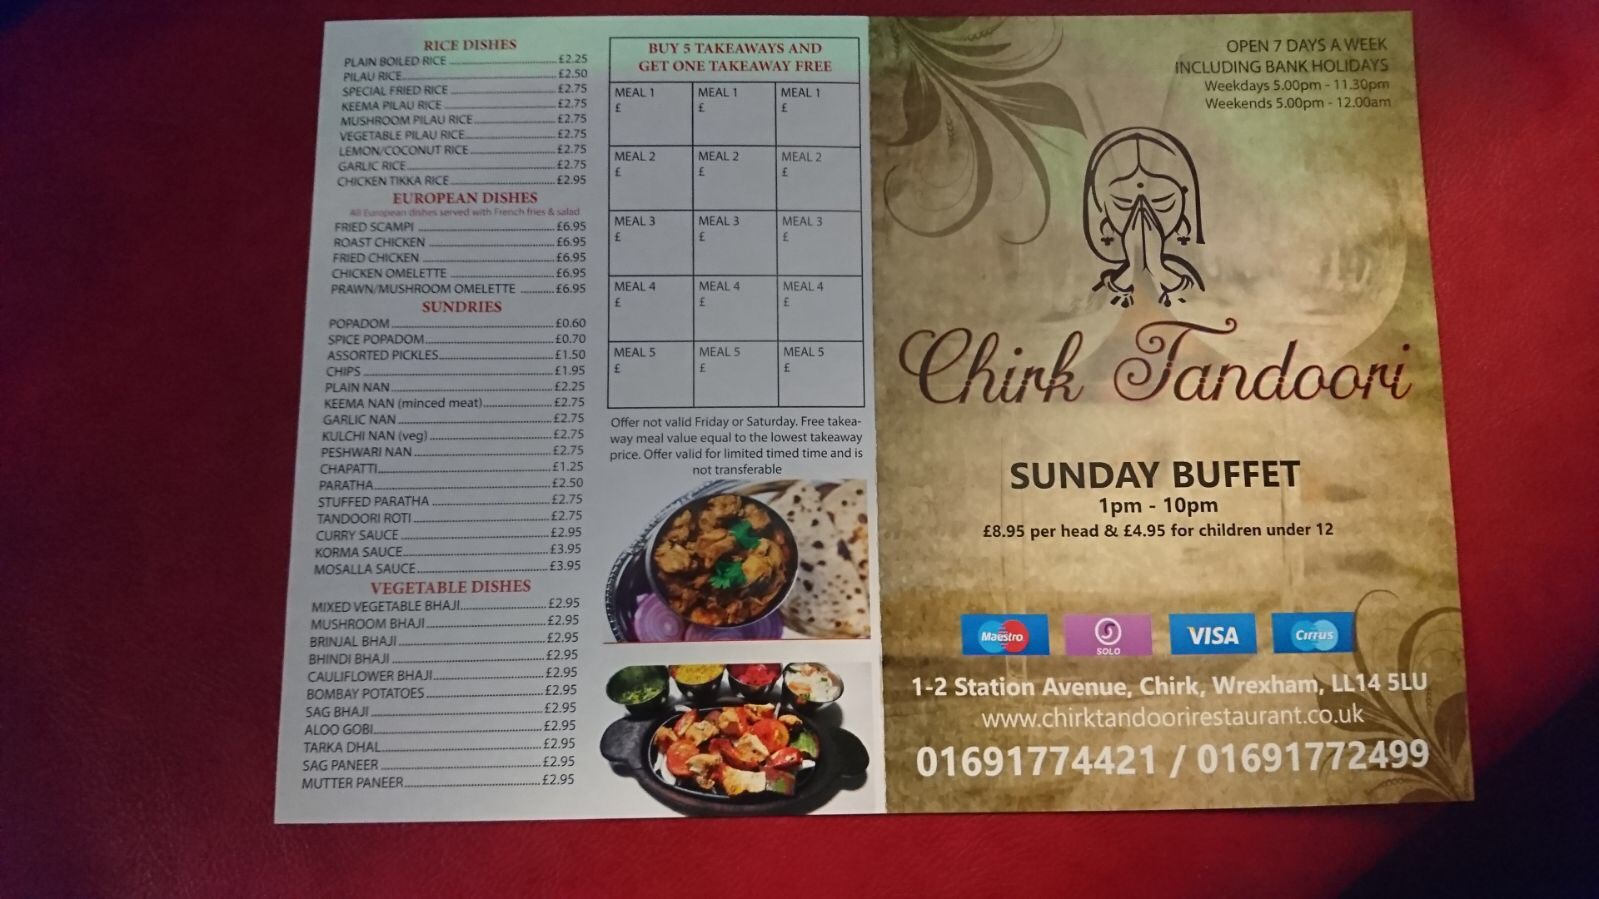 Chirk Tandoori Restaurant & Takeaway | 1-2 Station Avenue, Chirk, Wrexham LL14 5LU | +44 1691 772499